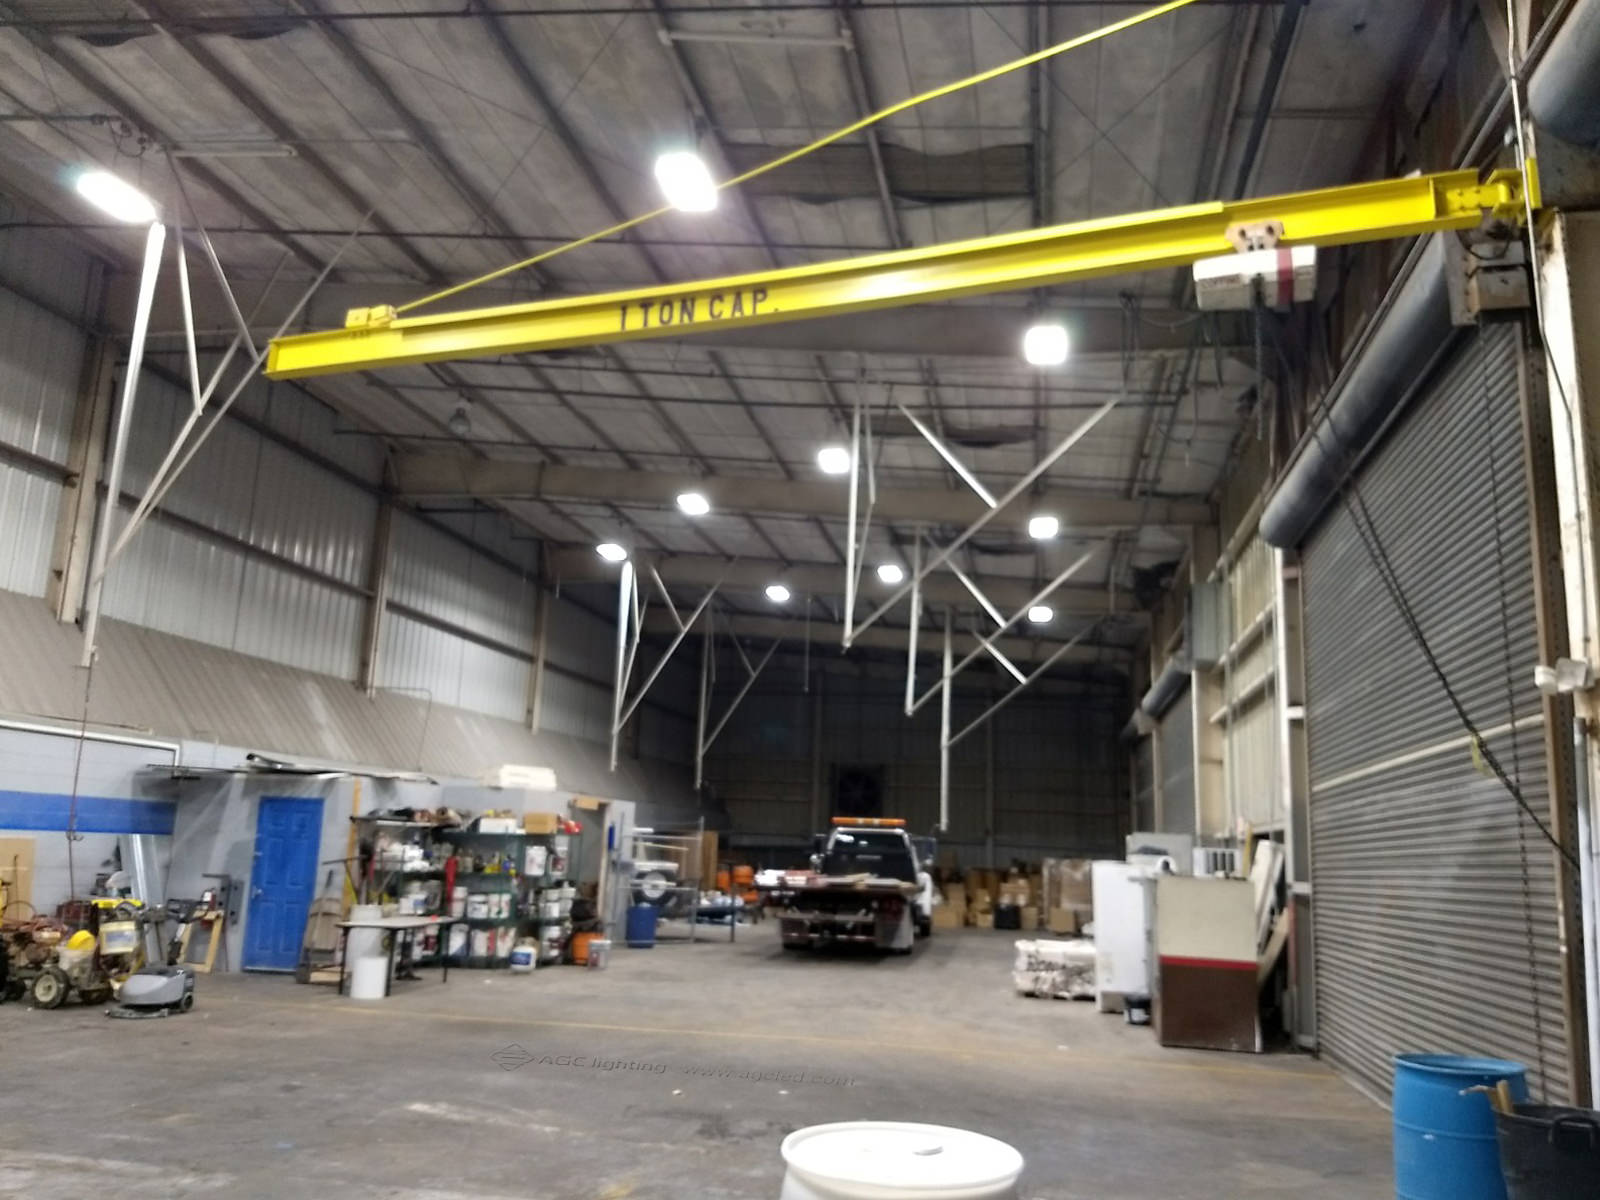 180W linear high bay light in warehouse